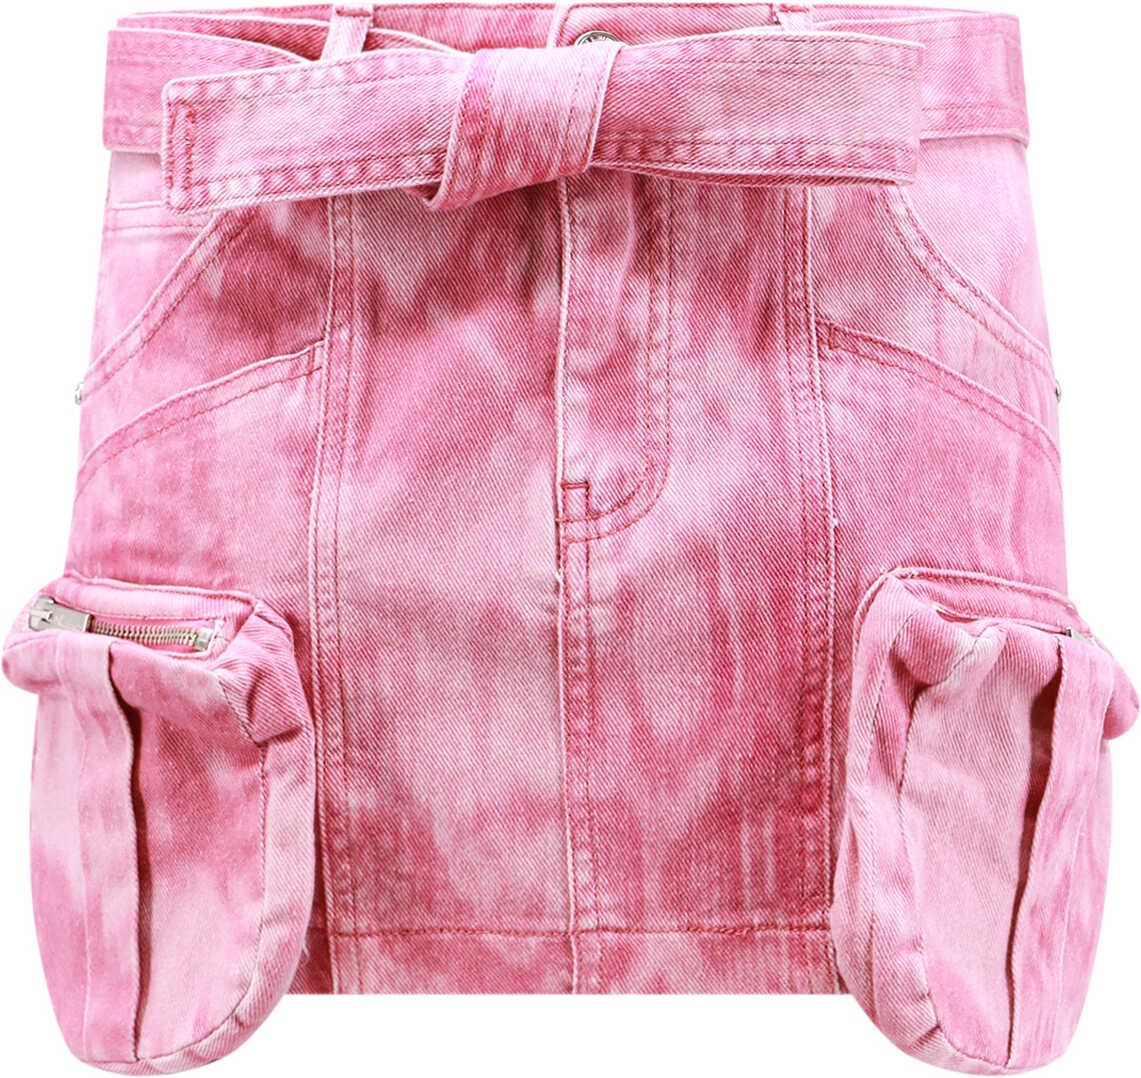 Poze Blumarine Skirt Pink b-mall.ro 